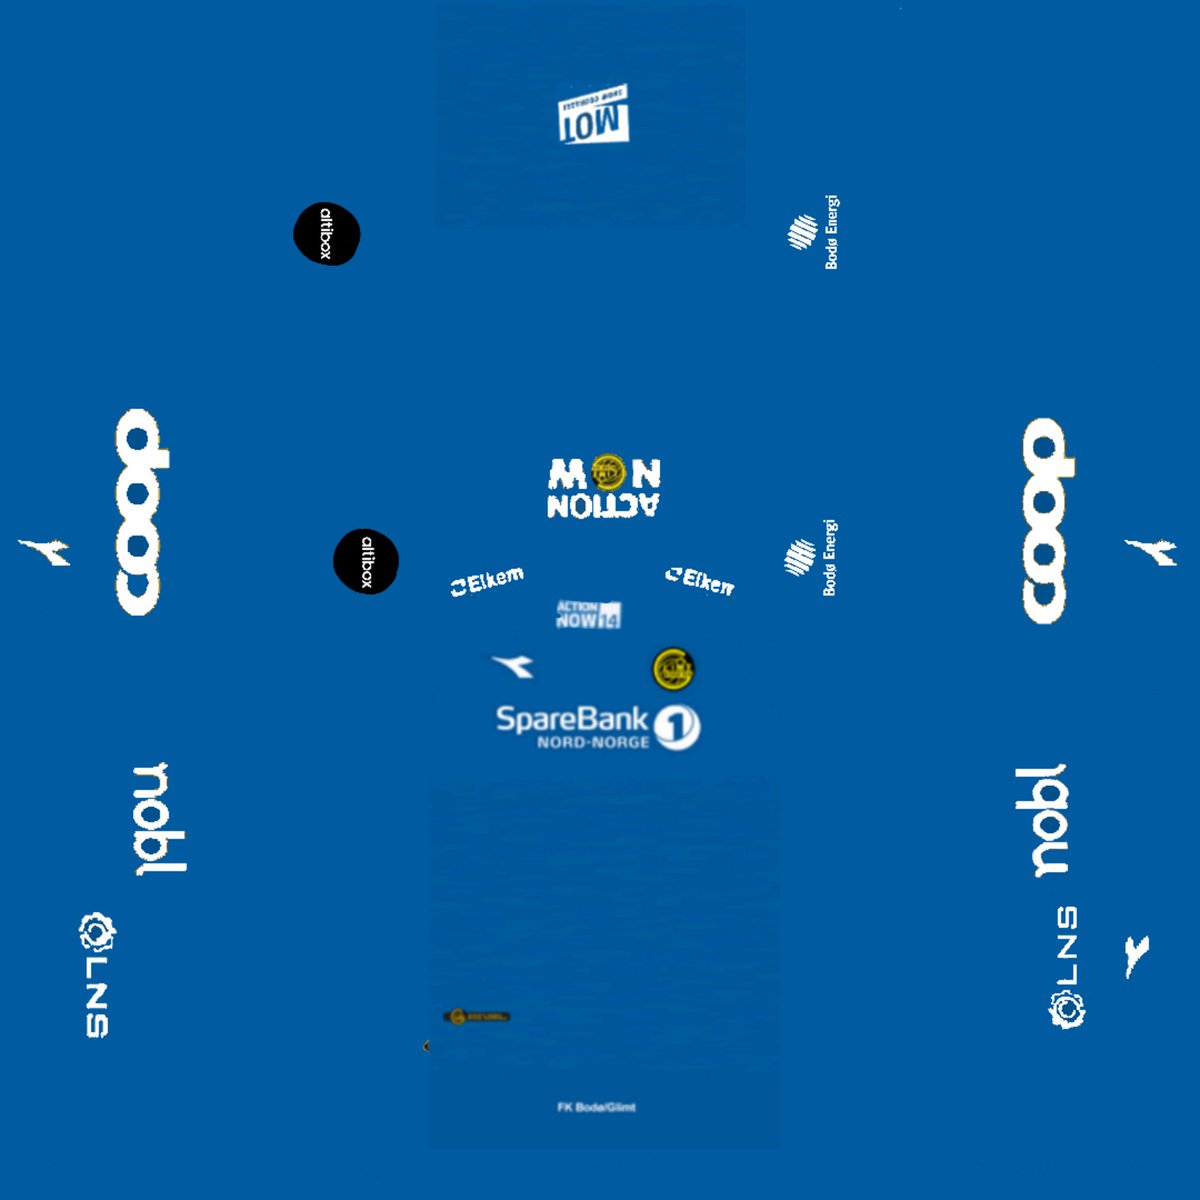 Official:Bodø Glimt 2023-24 Season Kits #drawing #akcedm #BodøGlimt #kits #pes2021 #pes21 #peskit #glimt #pes #bodo #FKBodoGlimt #bodoglimtkits #superlaget #Eliteserien #coop #nobl #actionnow #lns #mot #elkem #altibox #bodoenergi #sparebank #Diadora @Glimt
drive.google.com/drive/folders/…